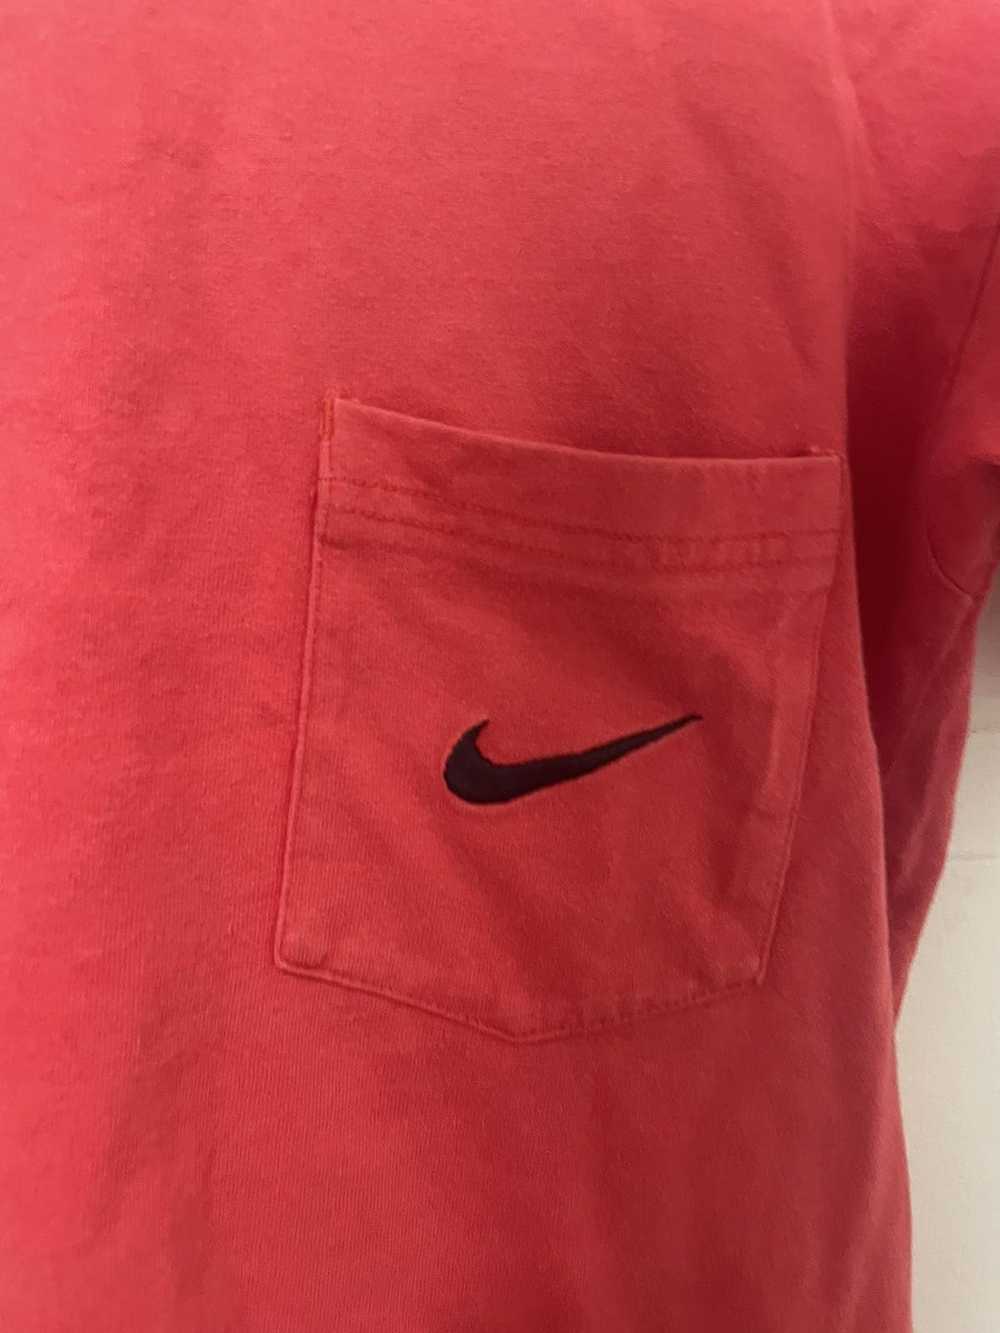 Nike VINTAGE RED NIKE POCKET T-SHIRT - image 2